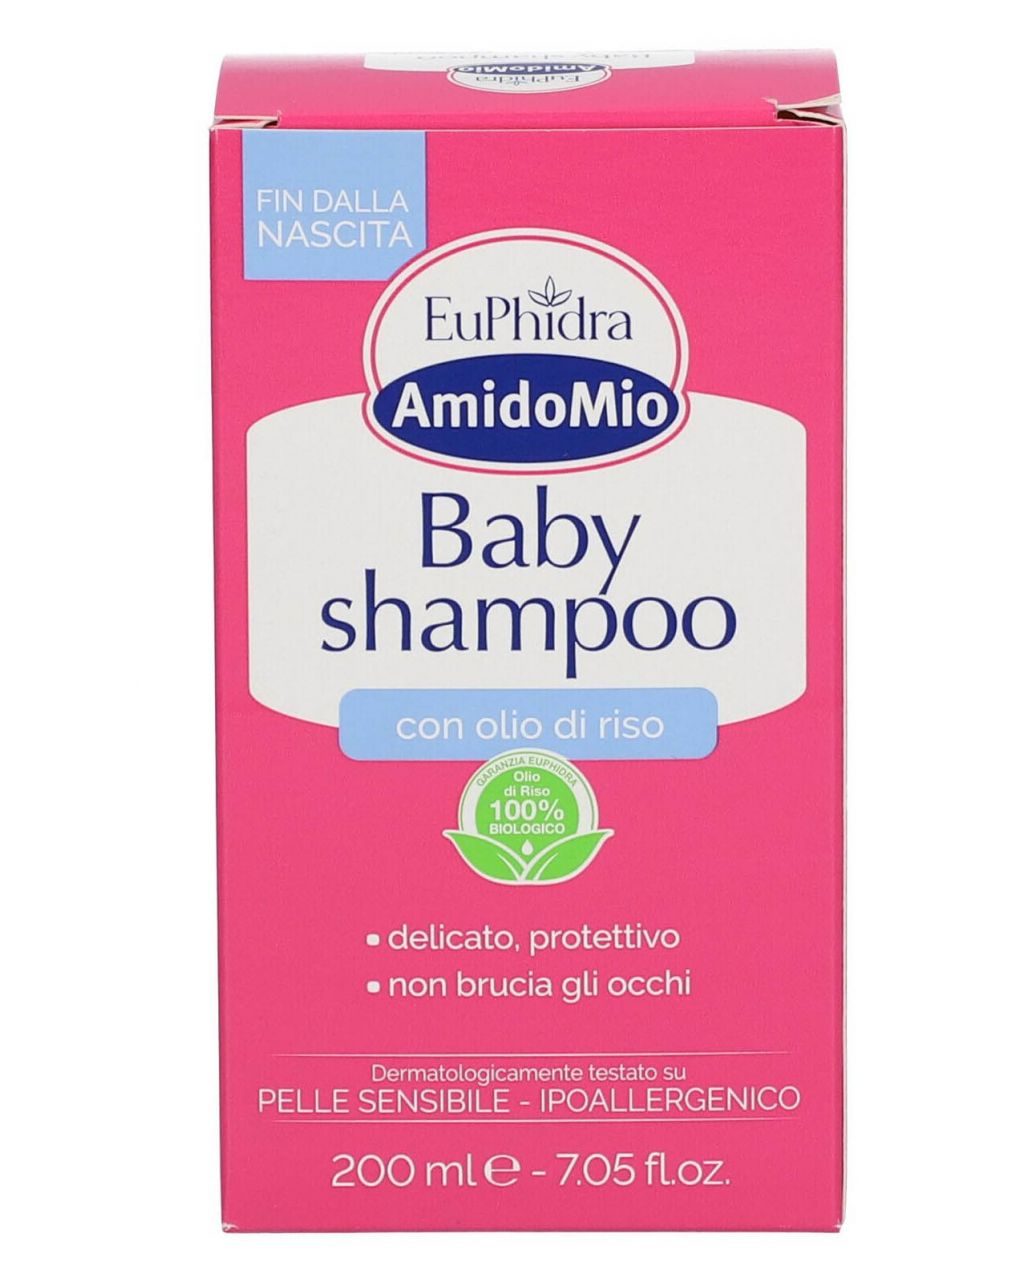 Baby shampoo 200ml - euphidra amidomio - Euphidra